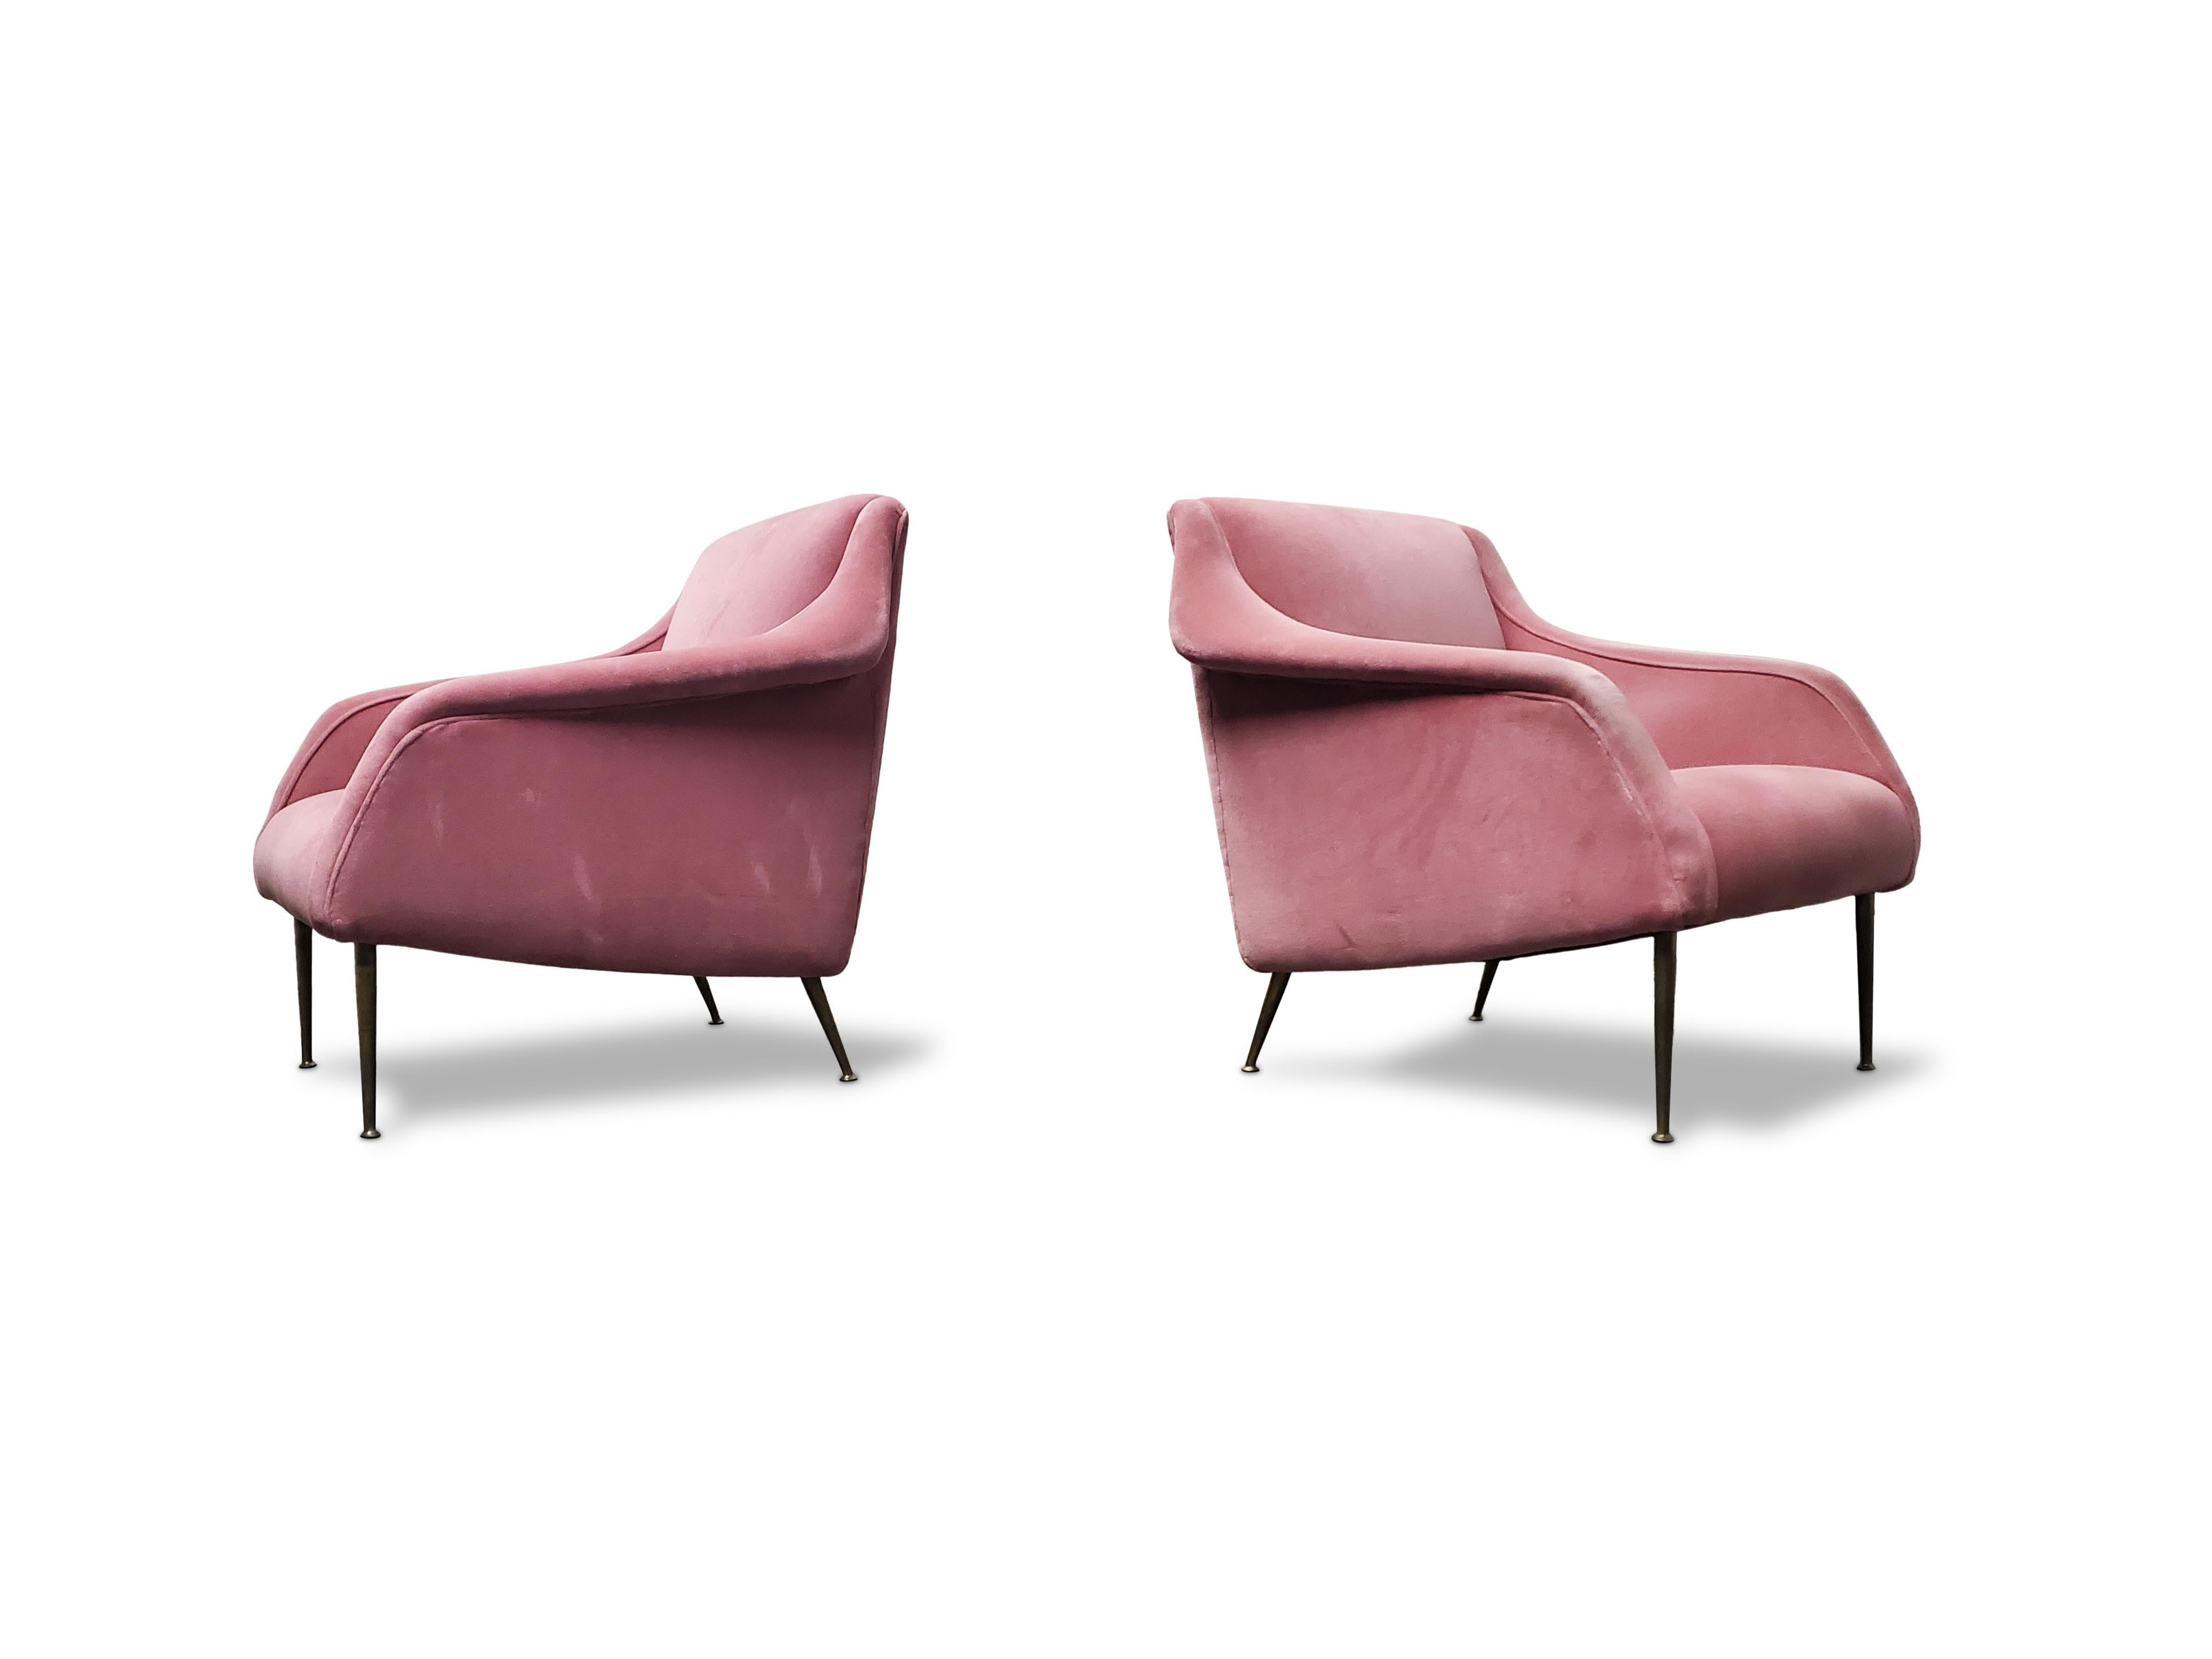 Rare pair of Carlo de Carli lounge chairs.

